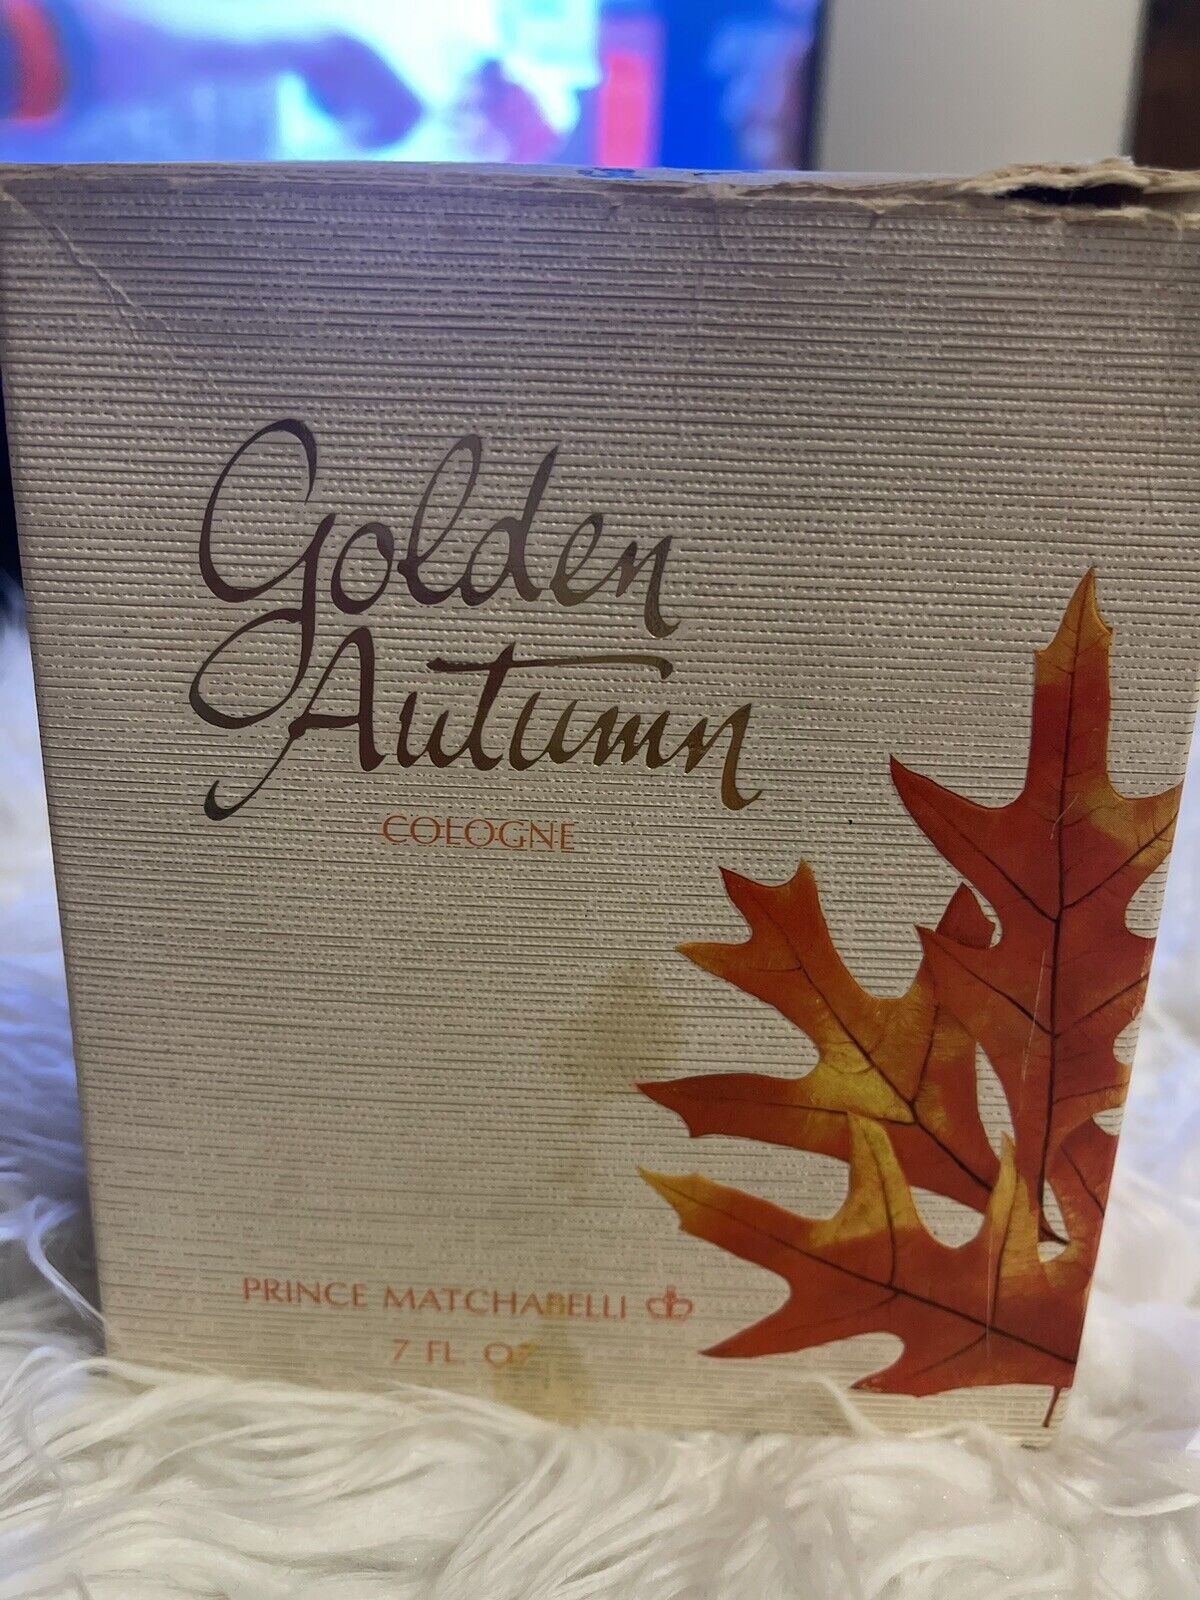 Prince Matchabelli Golden Autumn 7 FL oz Bottle